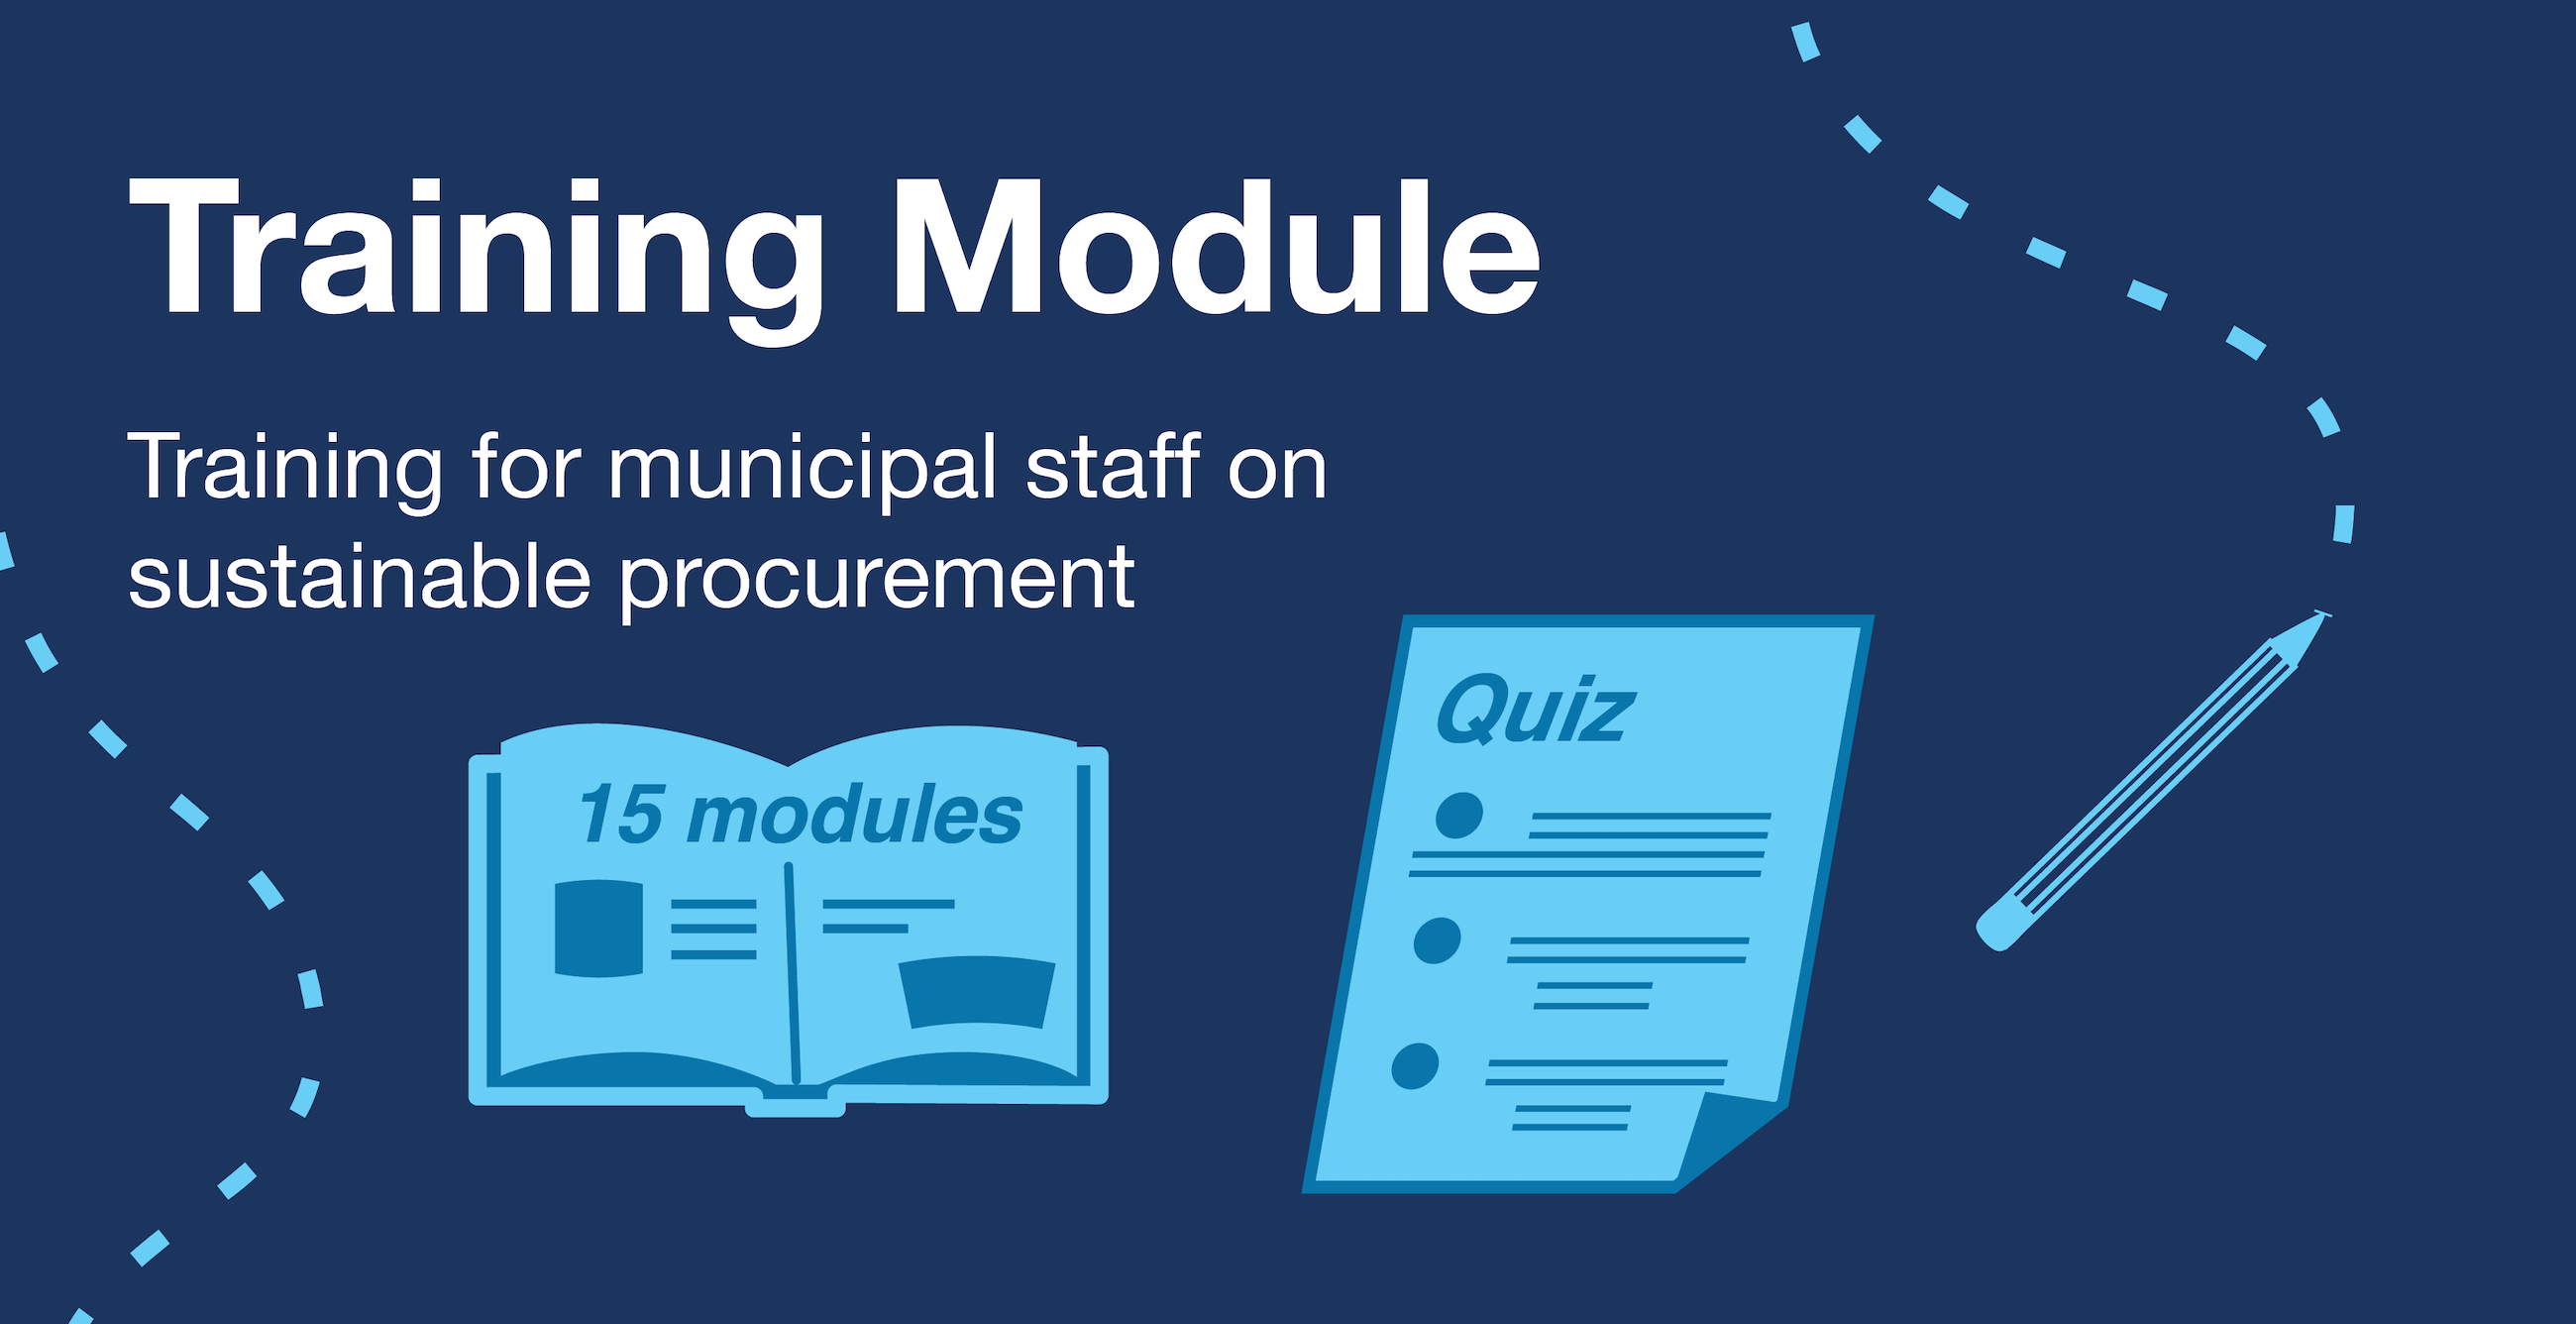 Training Module for municipal staff on sustainable procurement